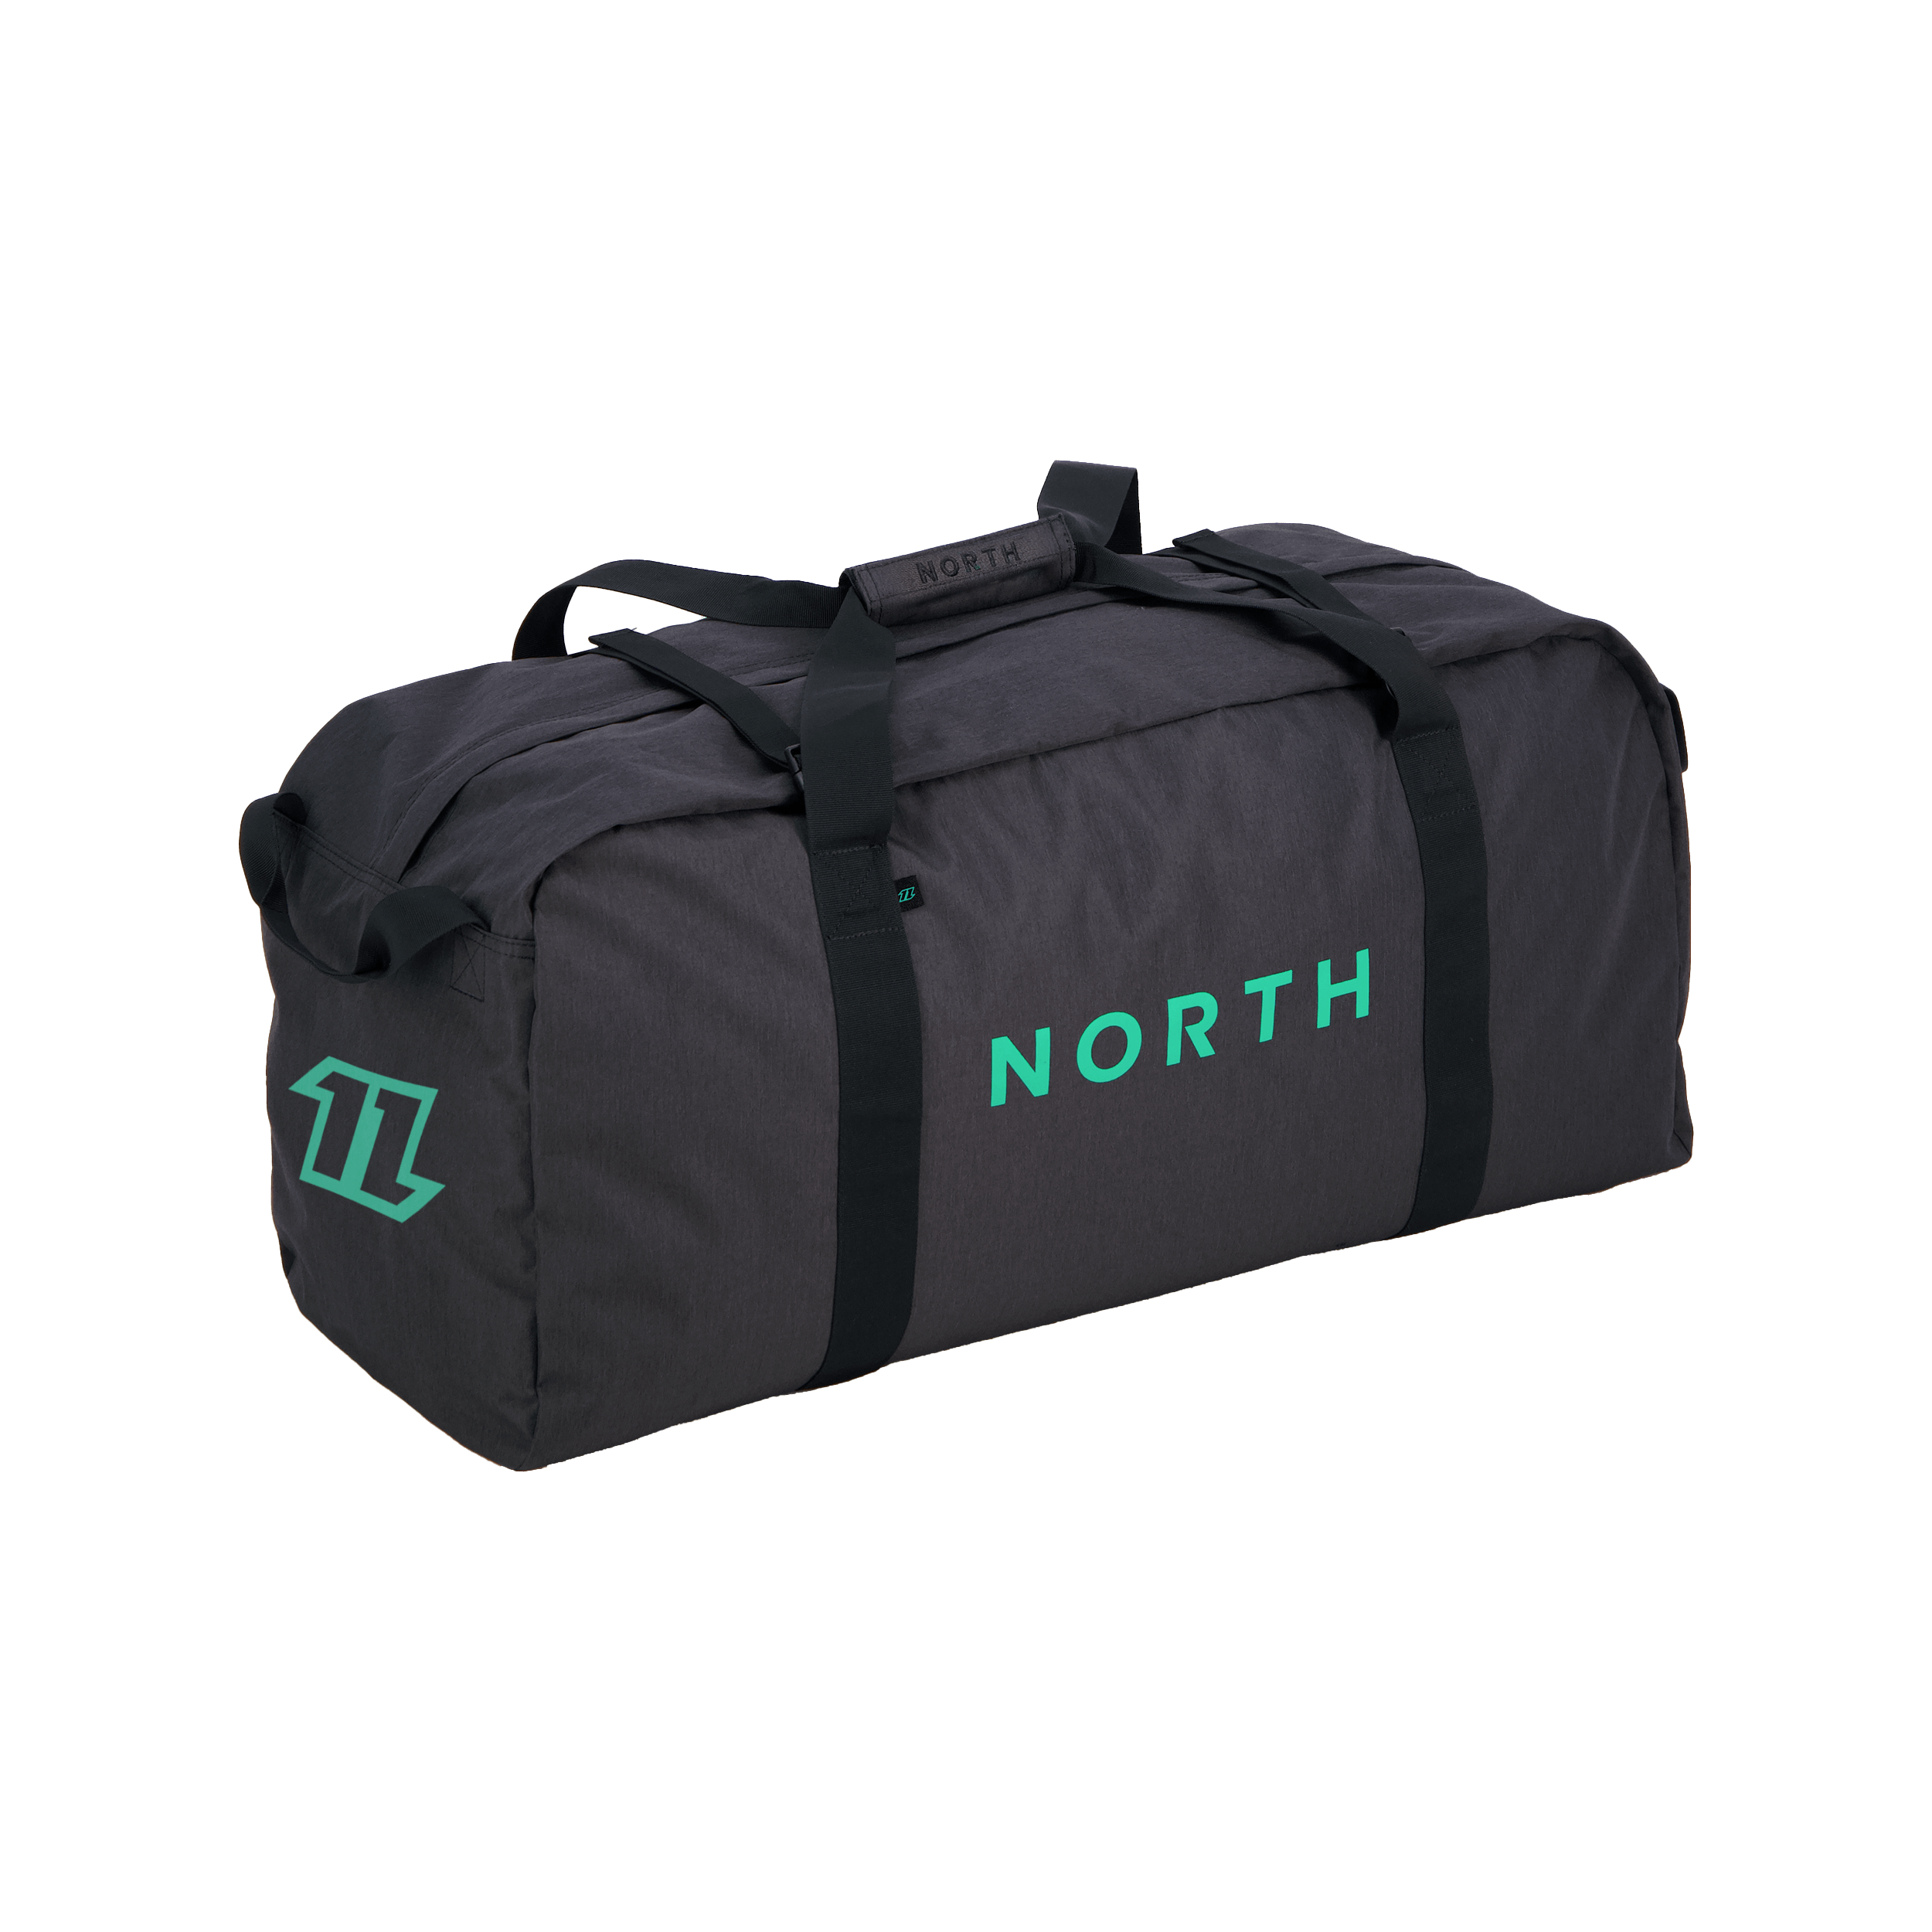 North North Voyage Duffle Bag